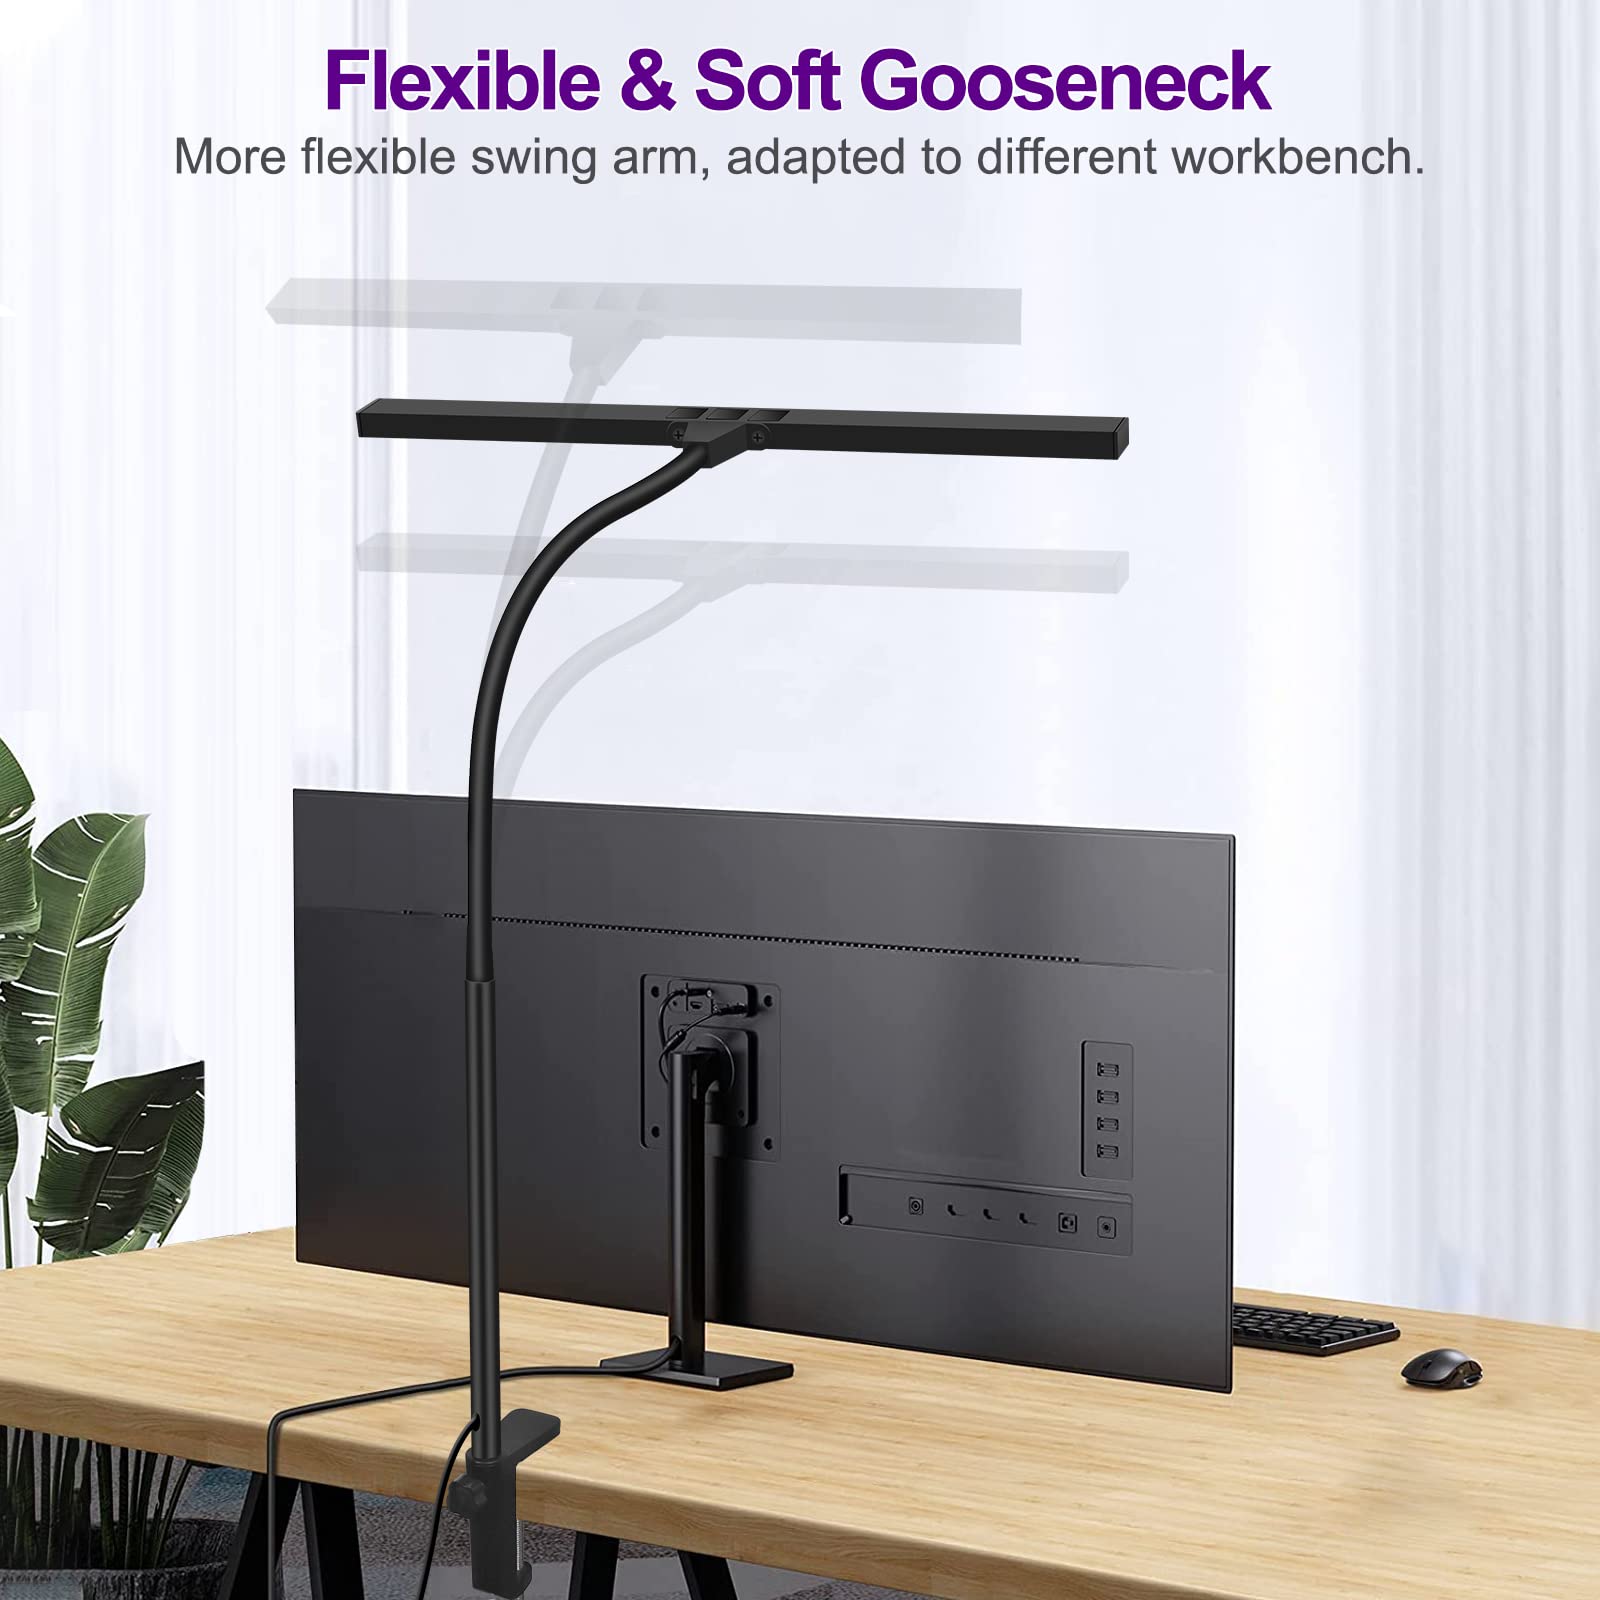 EOOKU LED Desk Lamp for Office Home, 12W Desk Light with Stepless Dimming Multi-Lighting Modes Adjustable Flexible Gooseneck for Reading, Study, Workbench